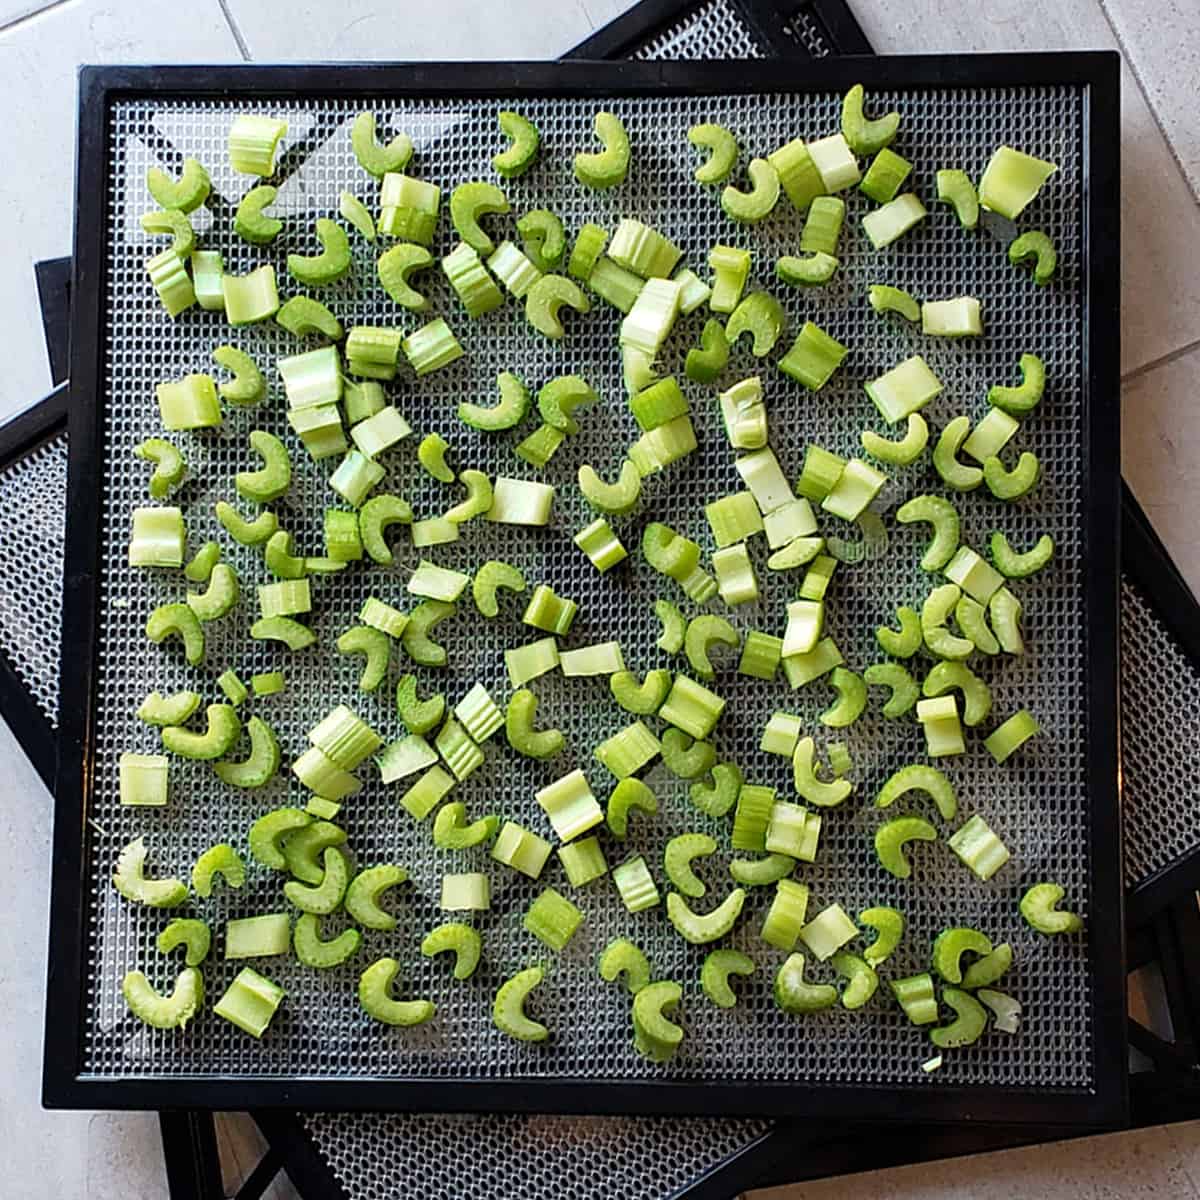 Sliced celery on Excalibur dehydrator trays.